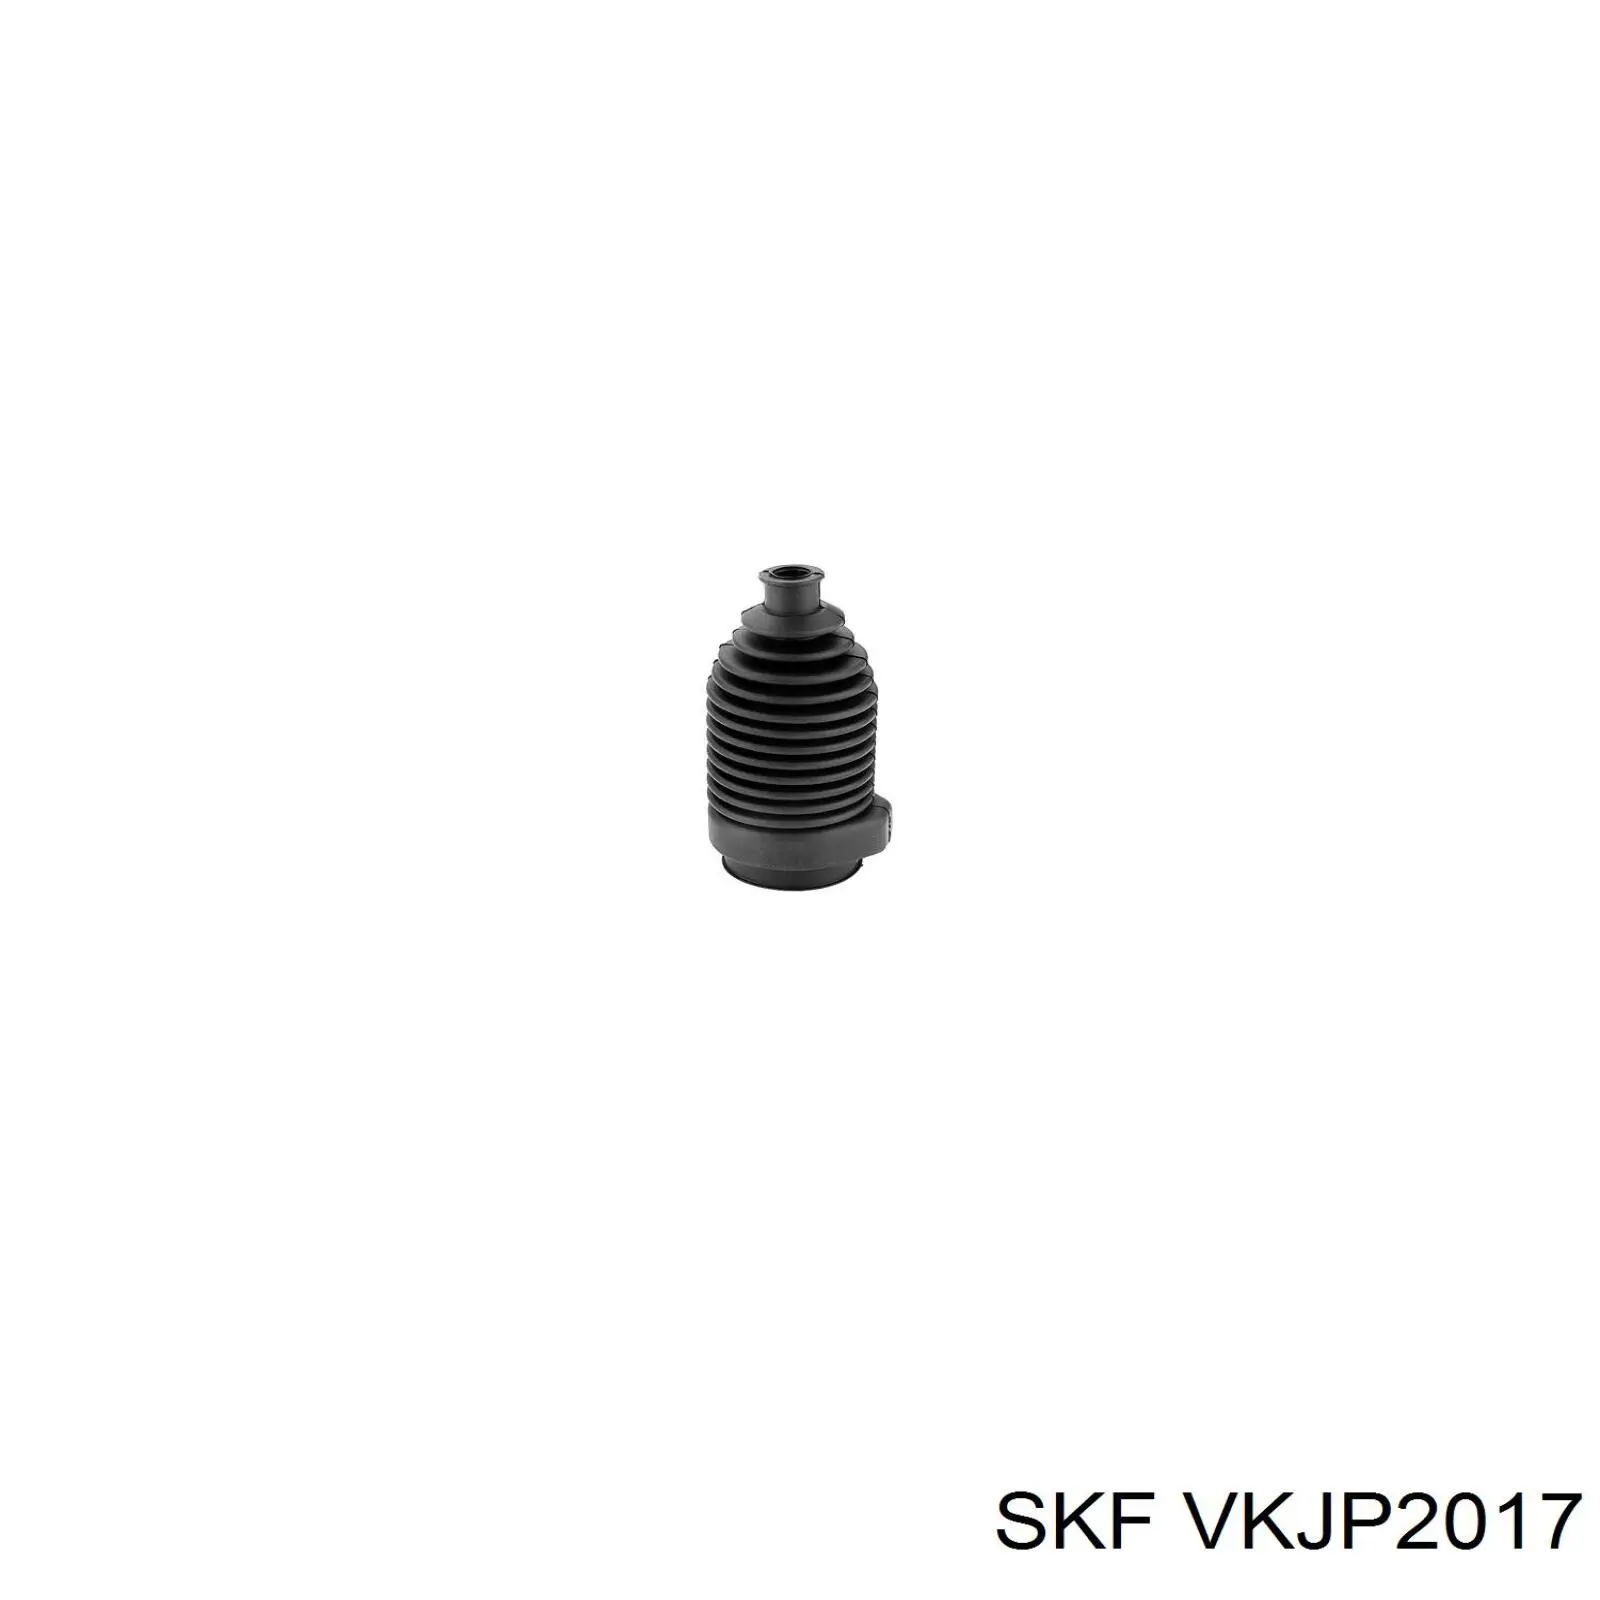 VKJP 2017 SKF fuelle, árbol de transmisión delantero interior